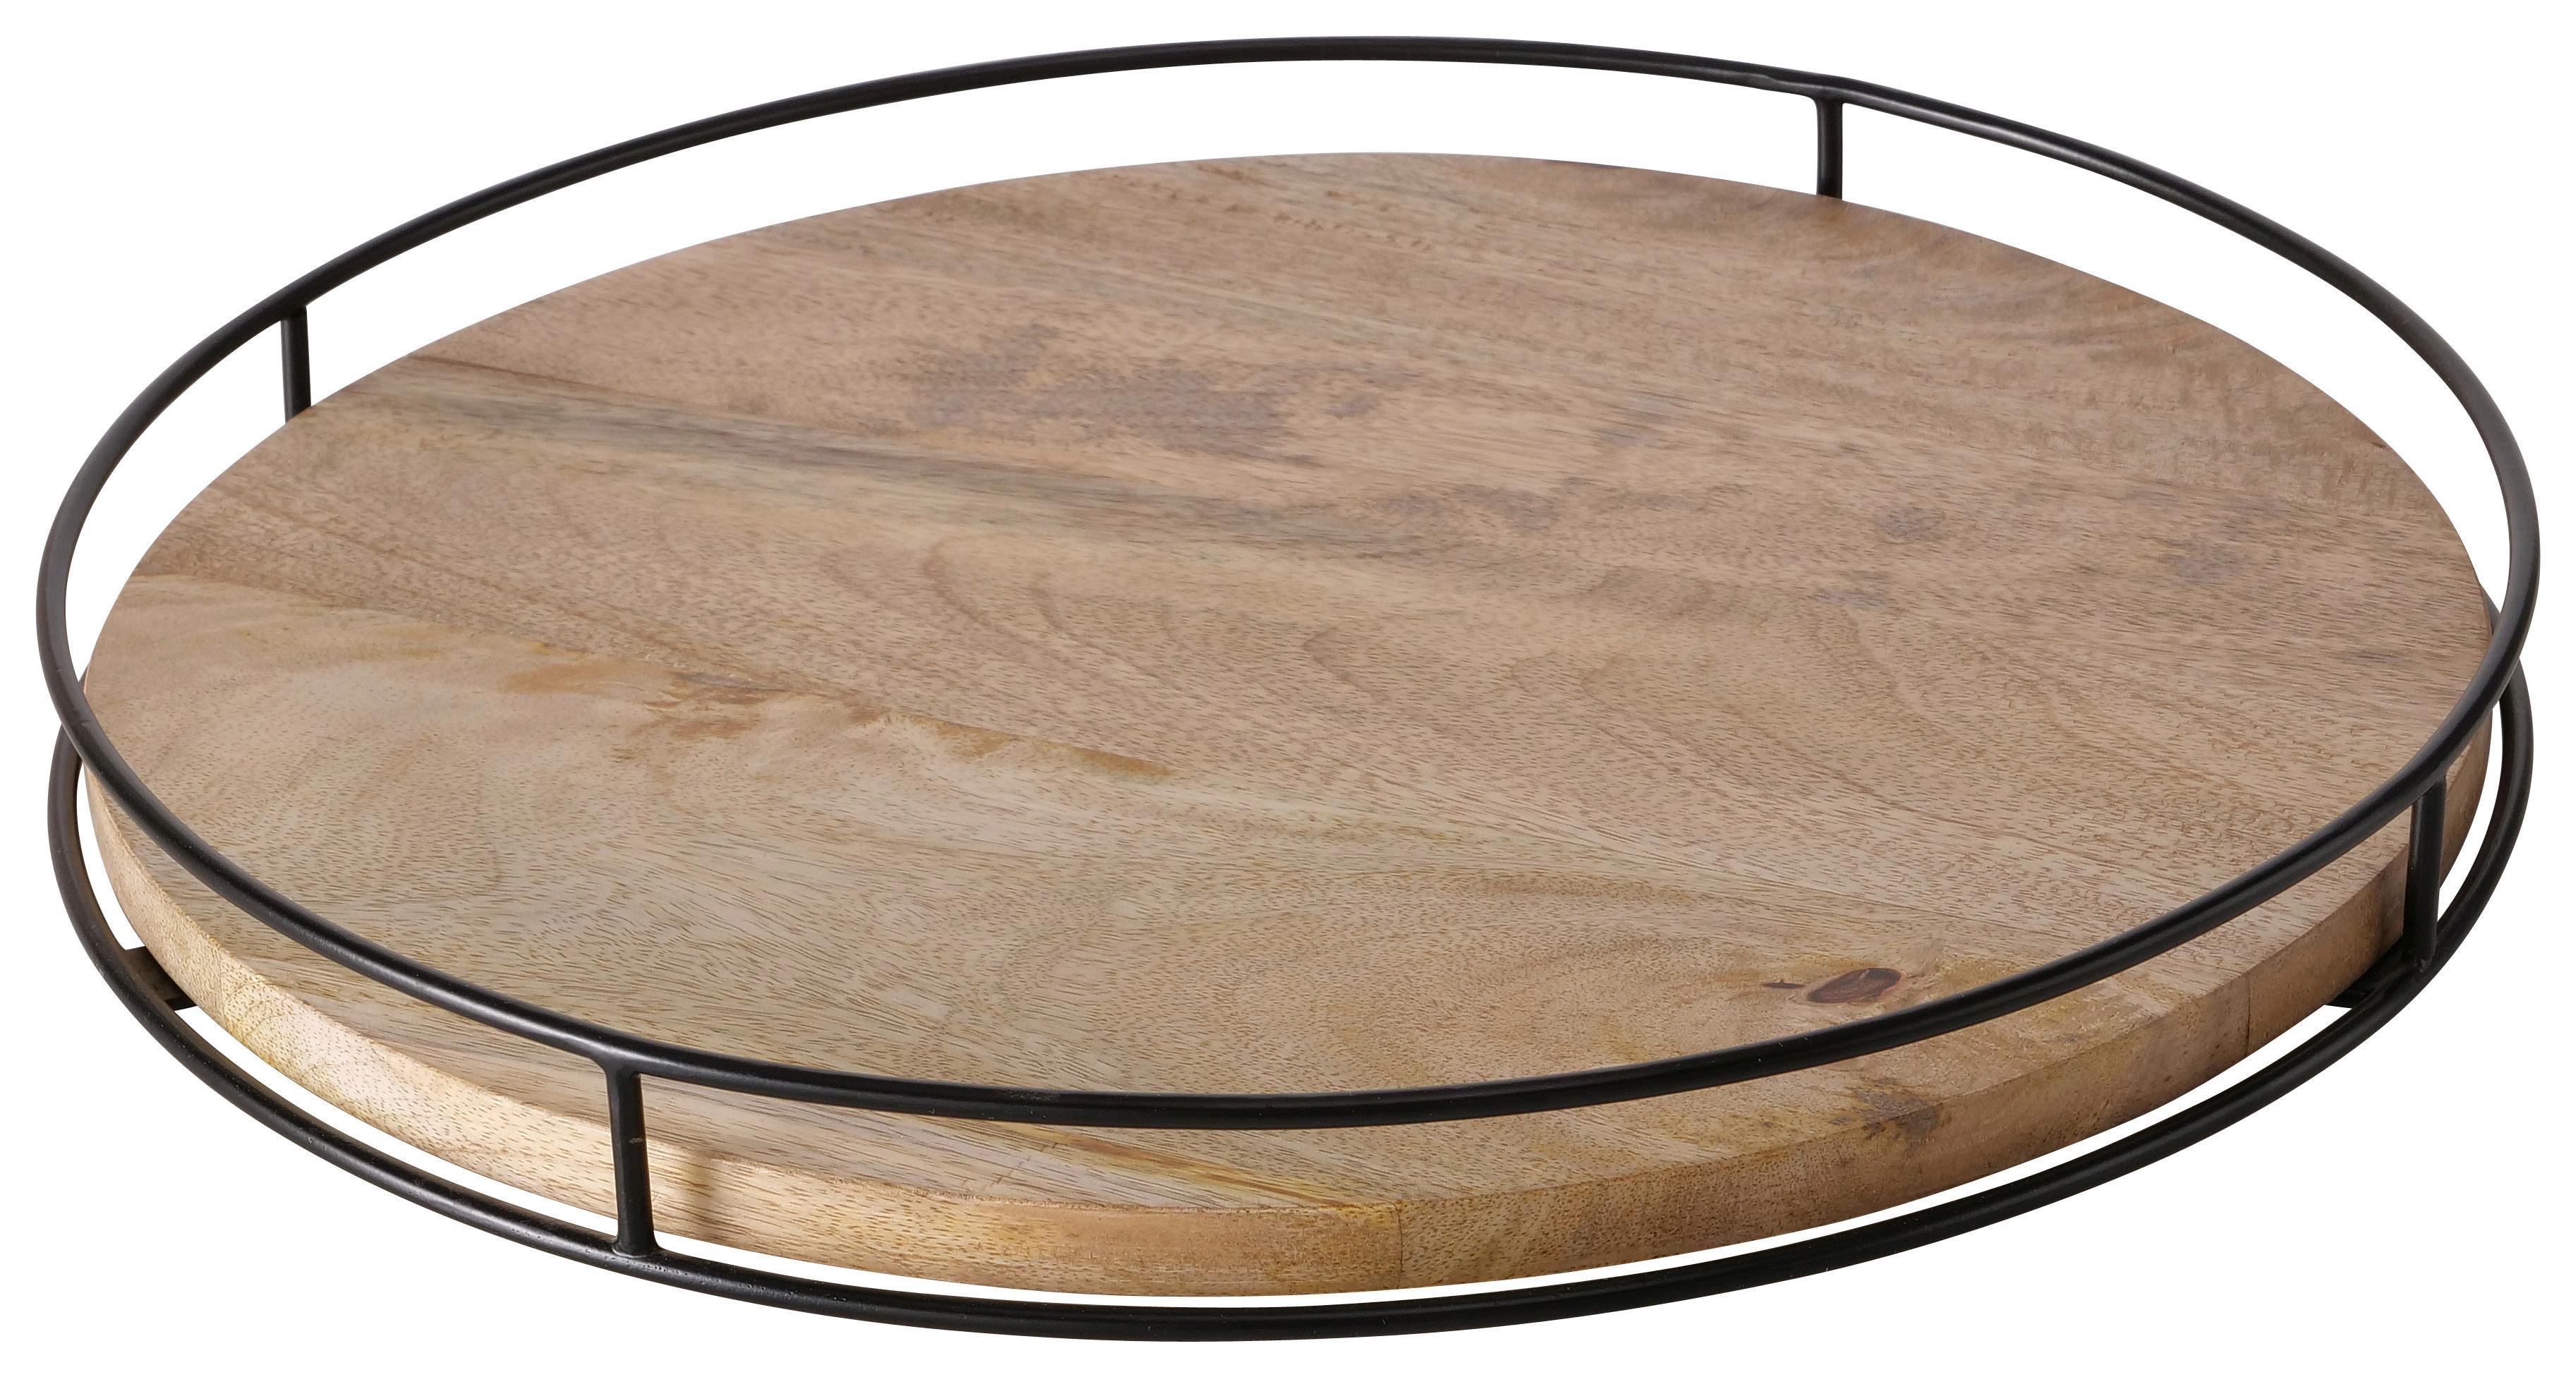 Dekorační Podnos Opura - černá/hnědá, Moderní, kov/dřevo (34/4cm) - Premium Living